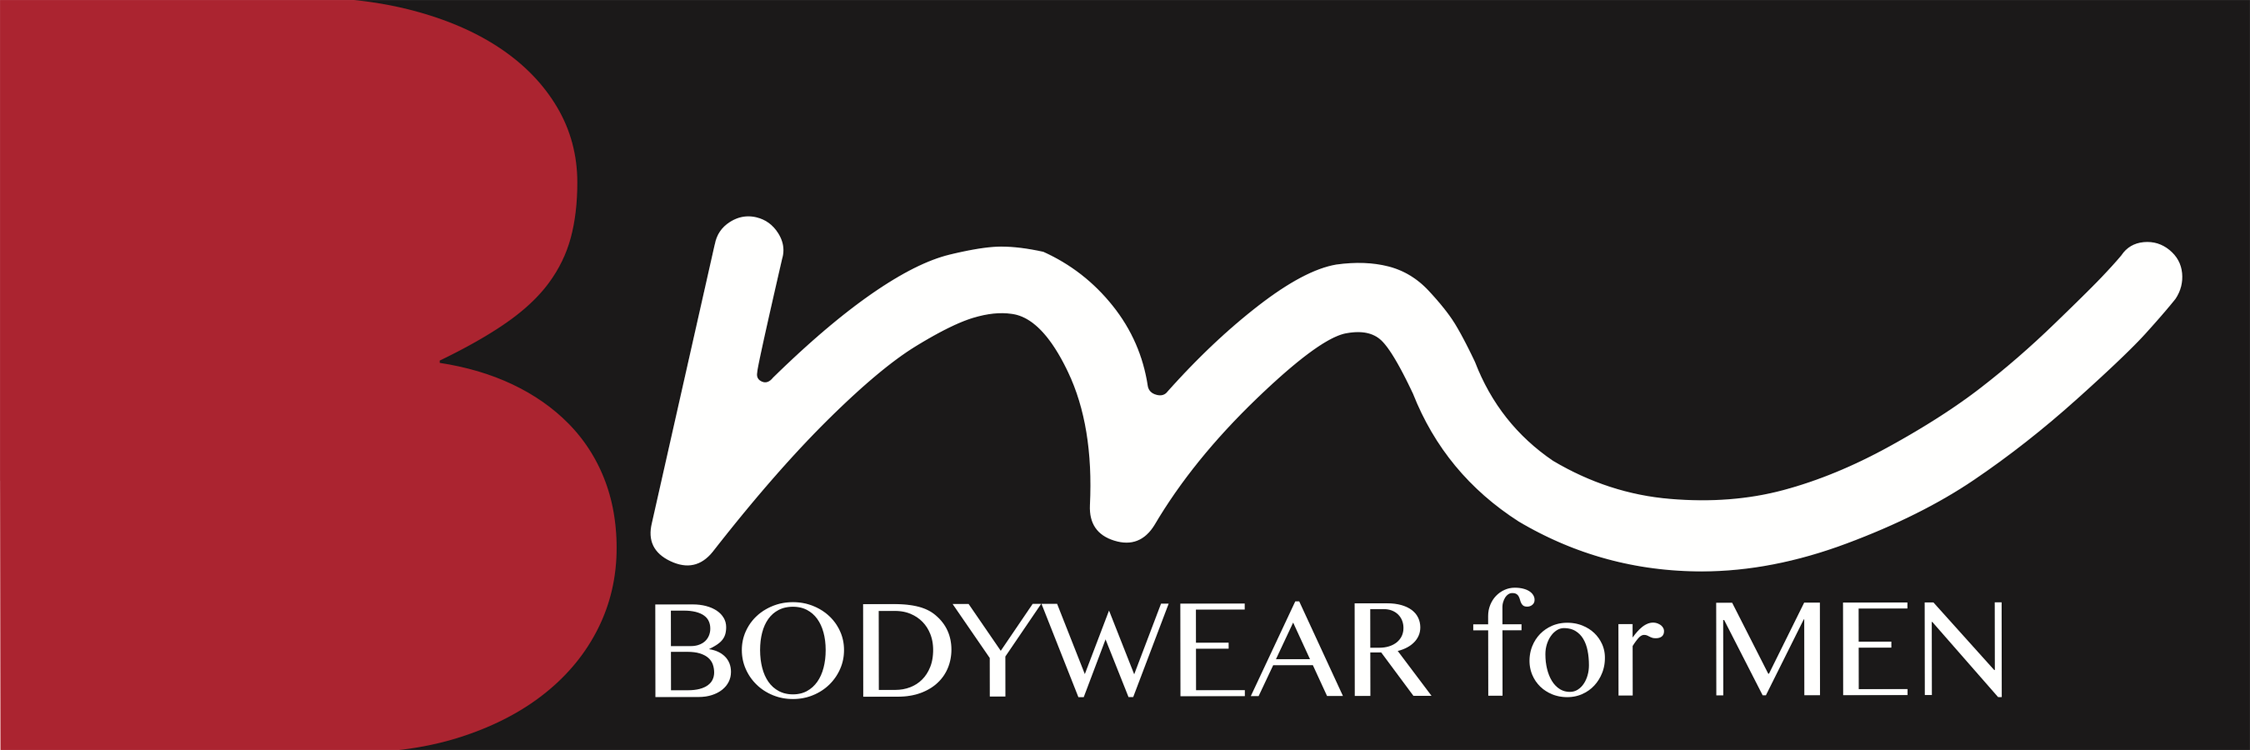 N2N Bodywear - Crunchbase Company Profile & Funding